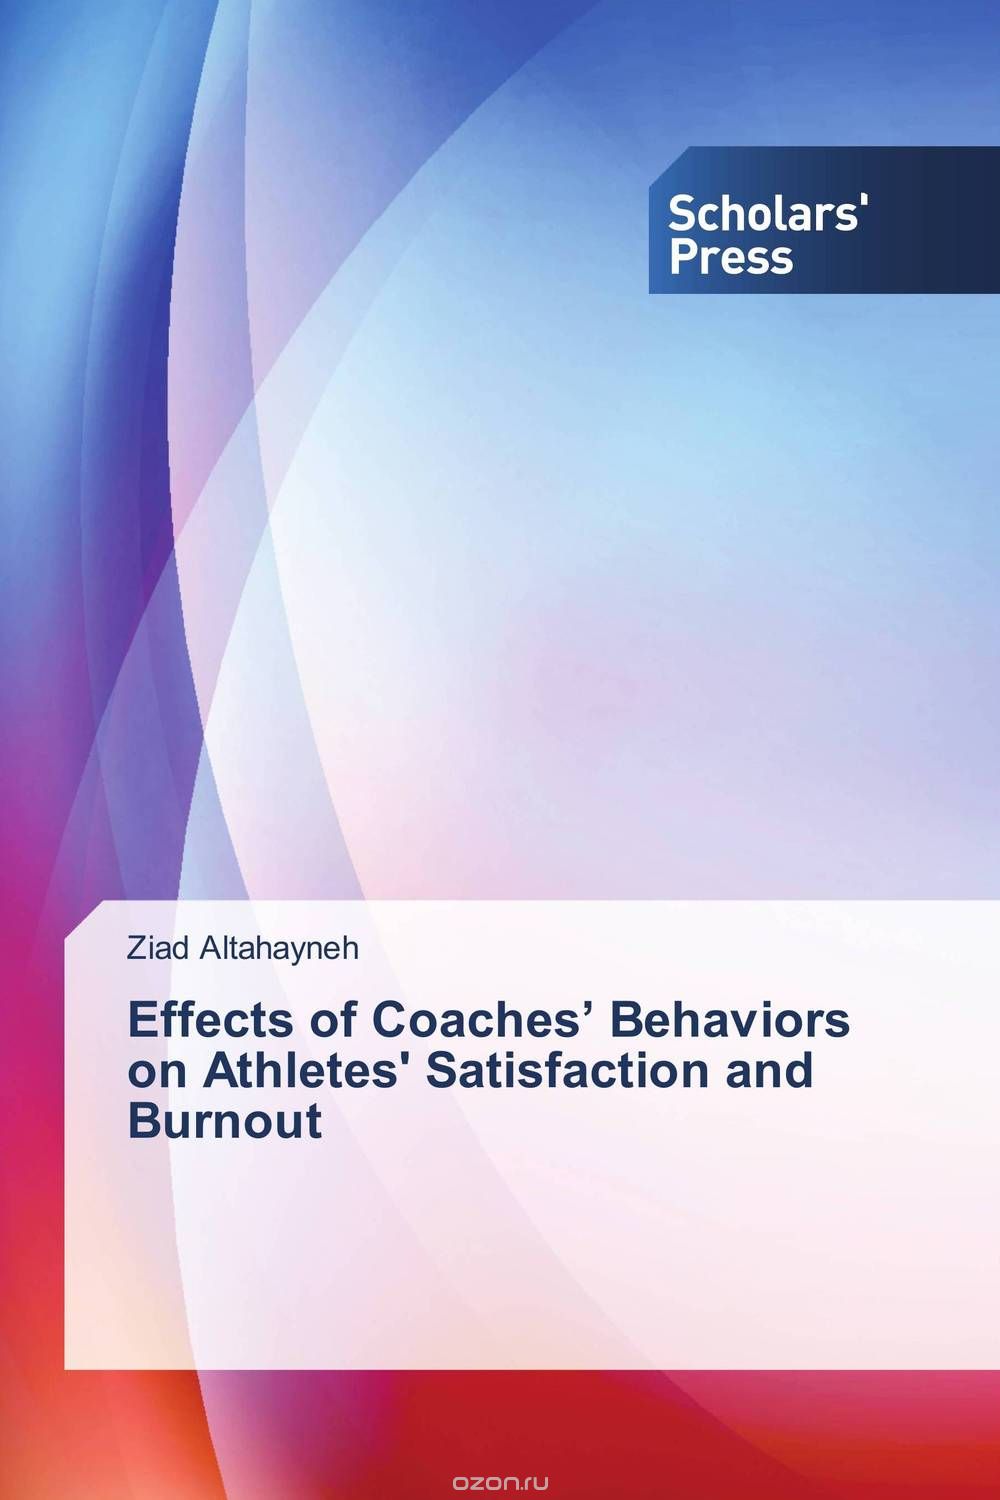 Скачать книгу "Effects of Coaches’ Behaviors on Athletes' Satisfaction and Burnout"